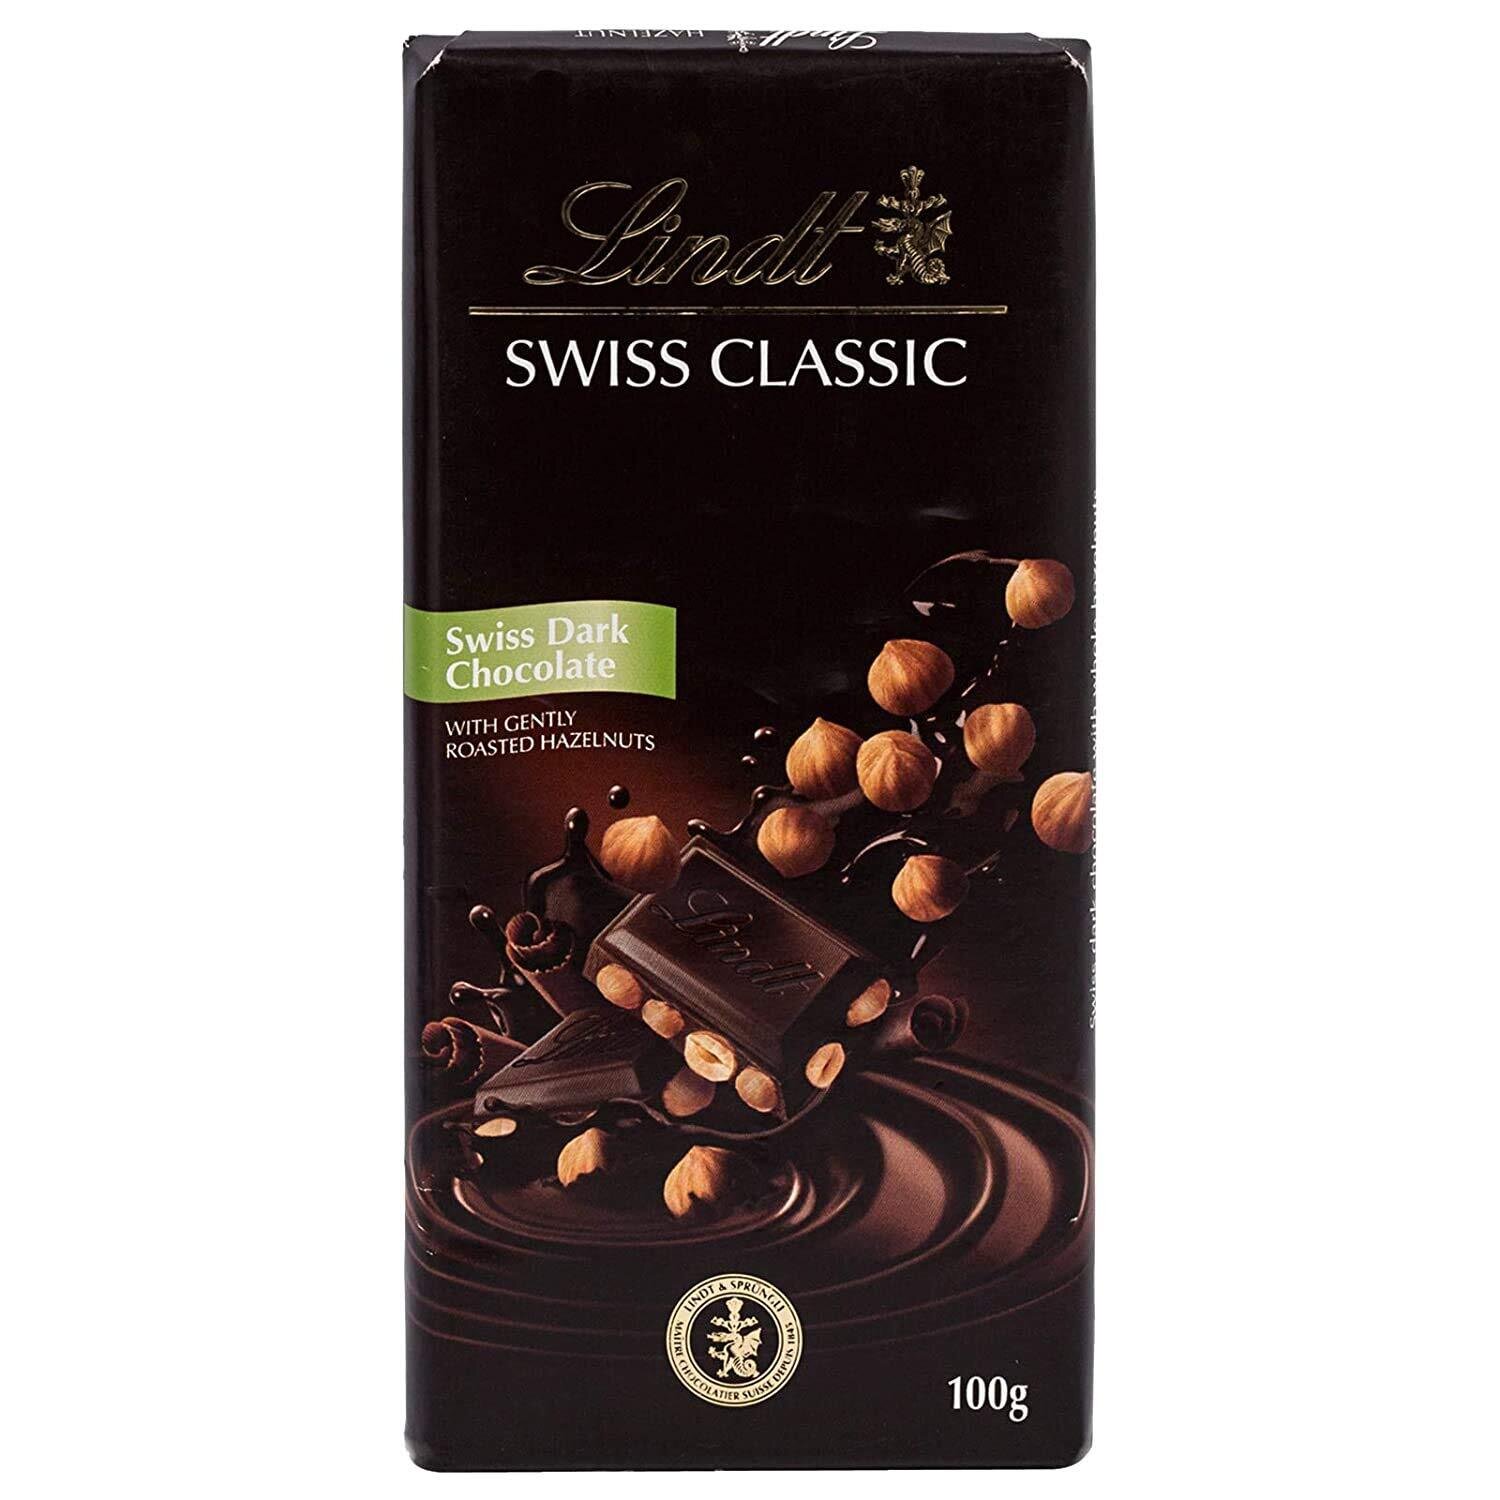 Lindt Swiss Classic Swiss Dark Chocolate 100G